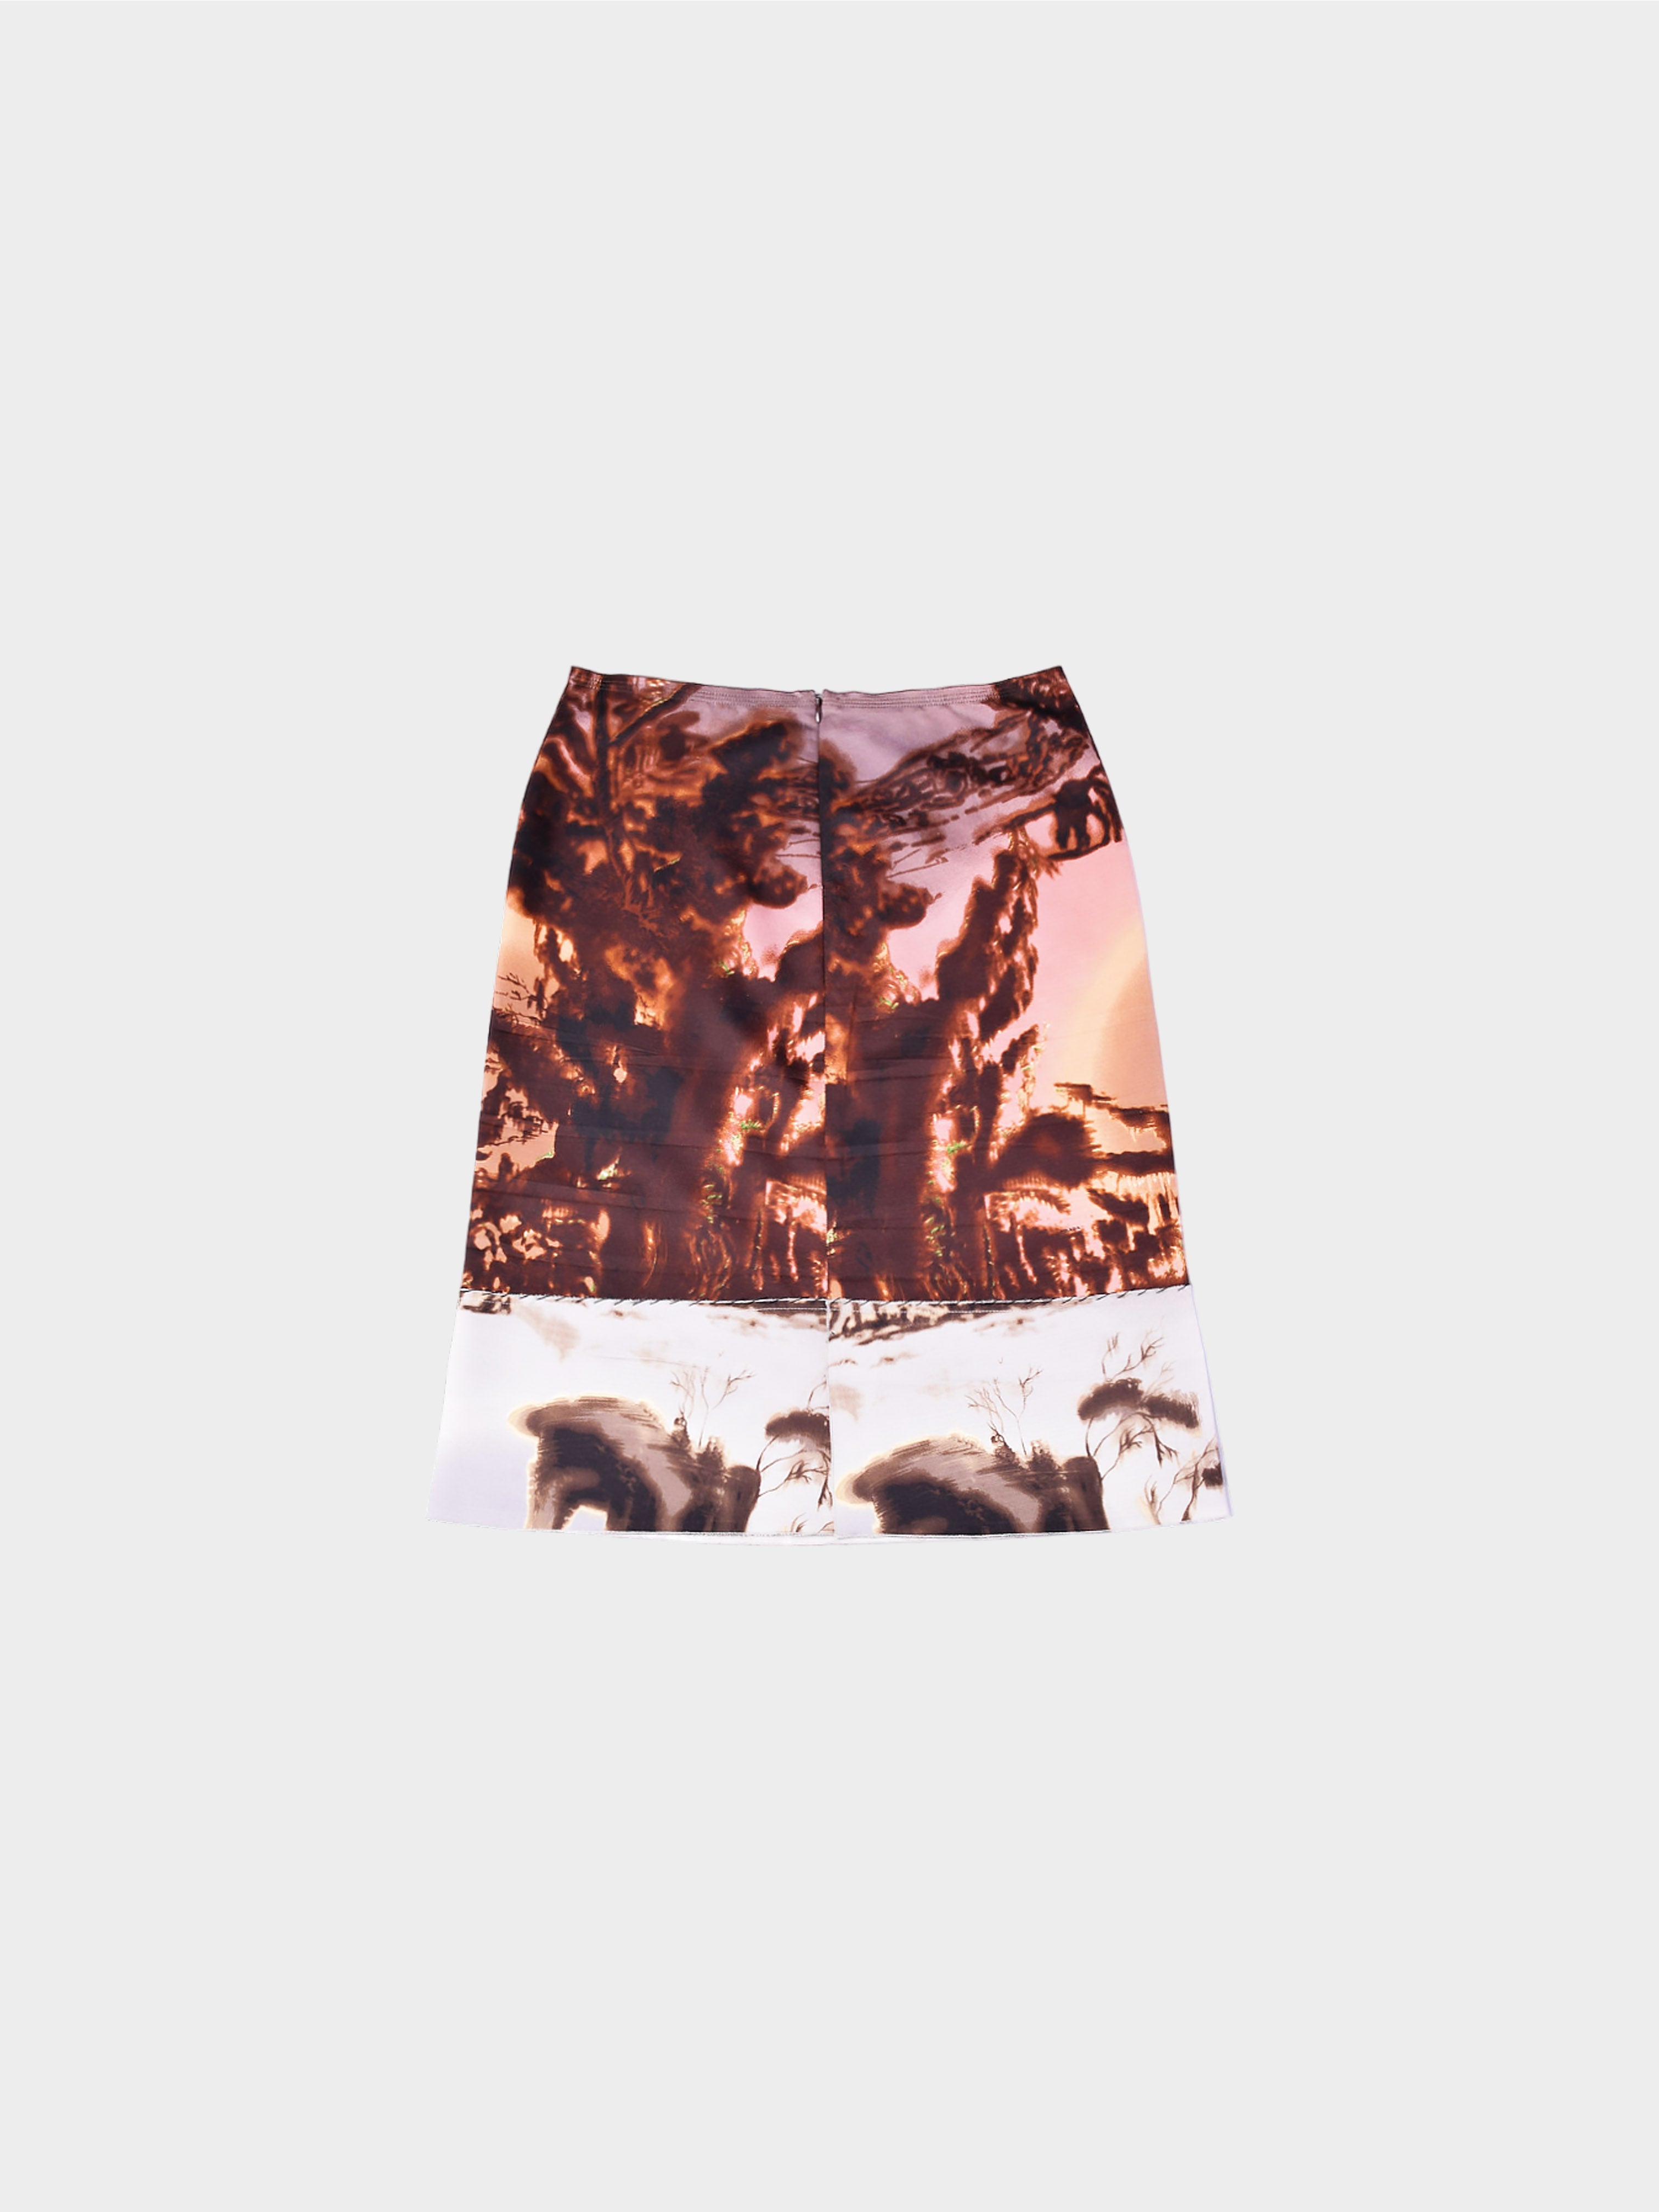 Prada FW 2004 Abstract Scenic Print Skirt